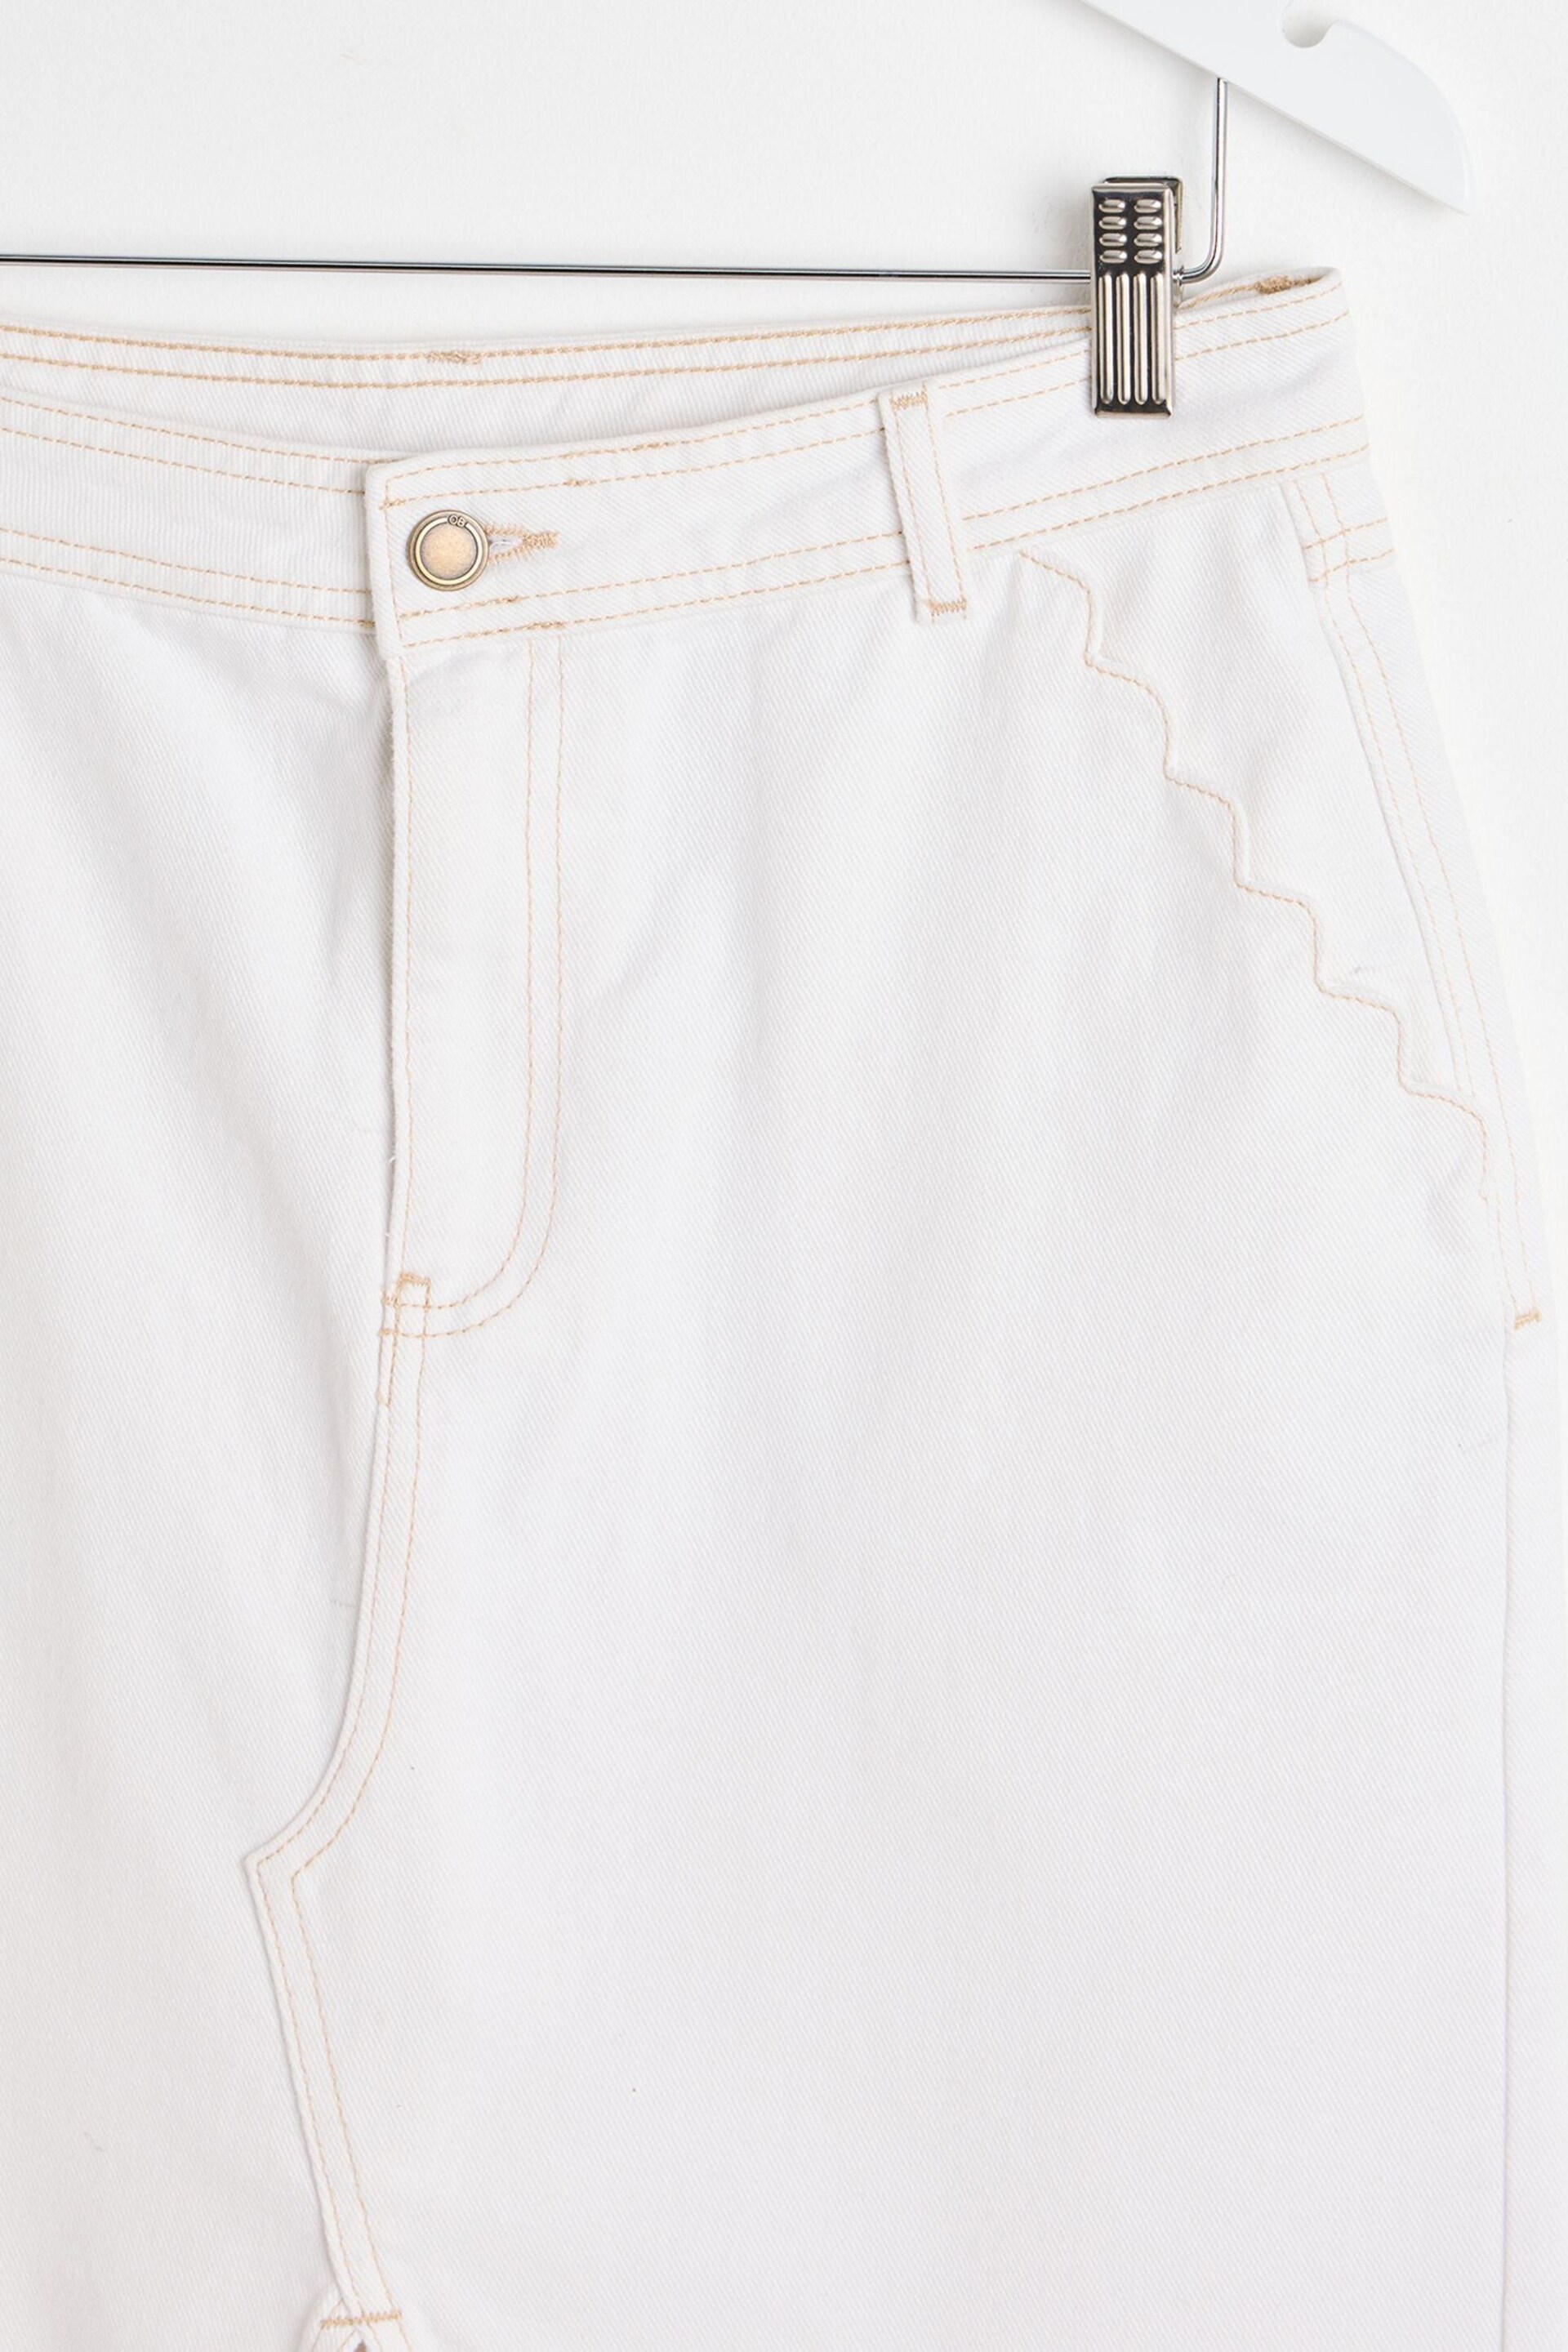 Oliver Bonas White Contrast Stitch Midi Skirt - Image 7 of 9